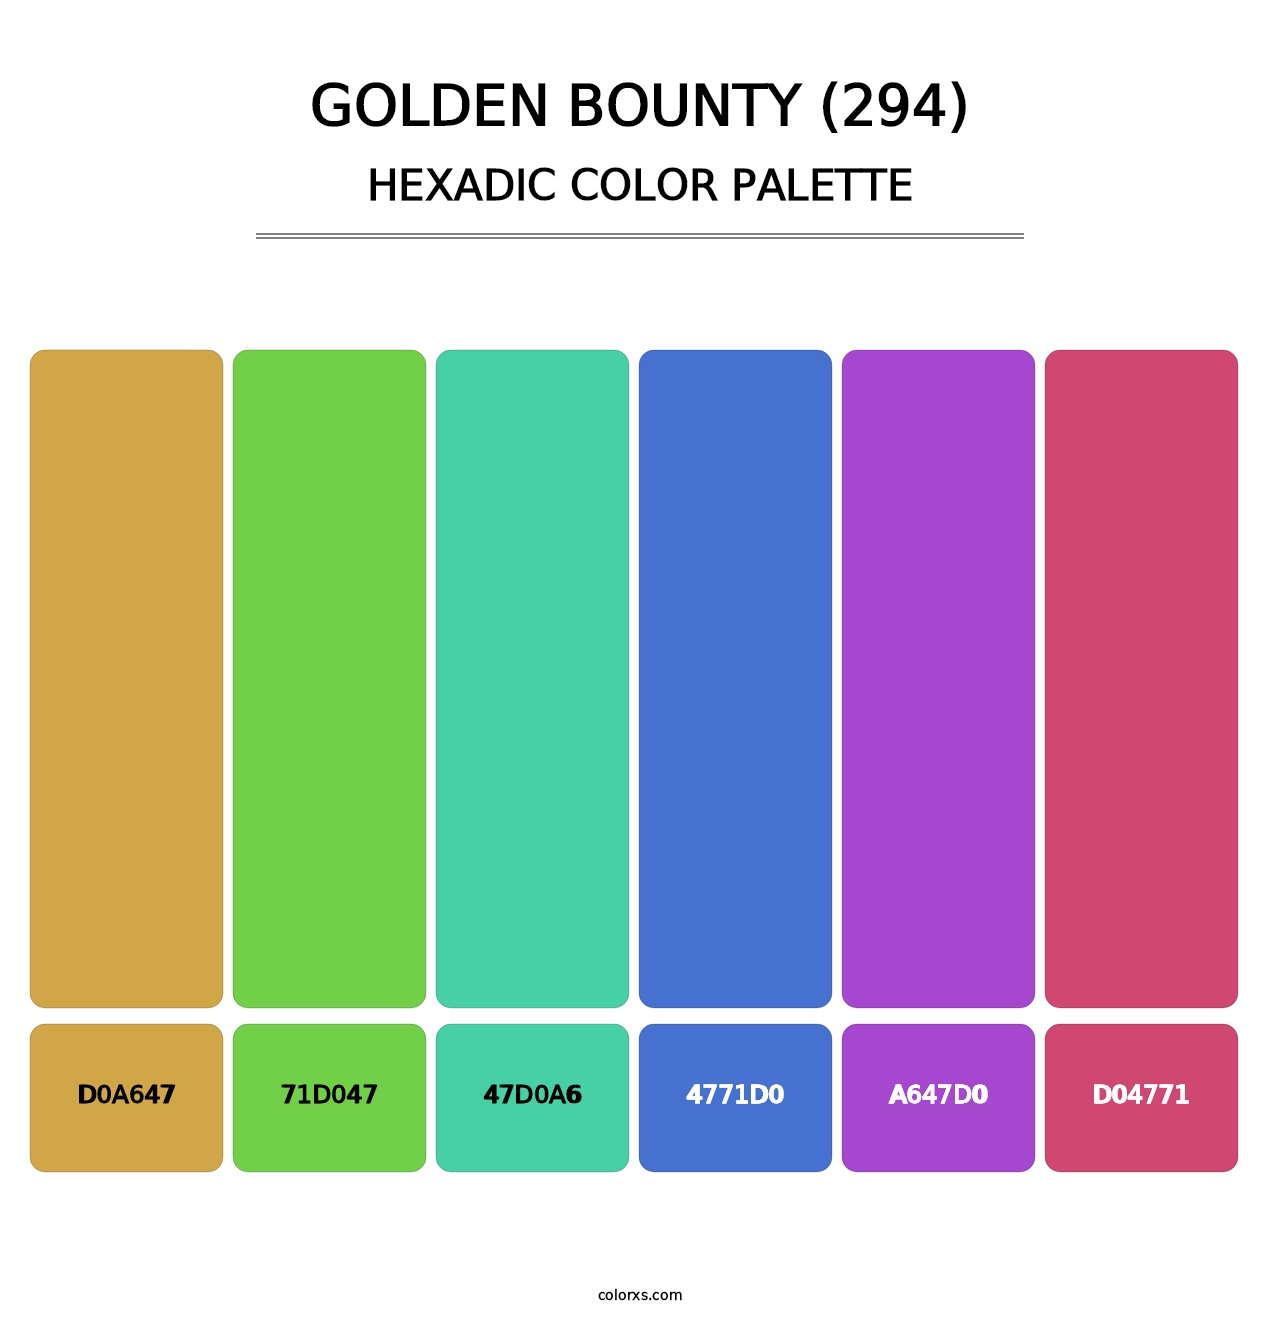 Golden Bounty (294) - Hexadic Color Palette